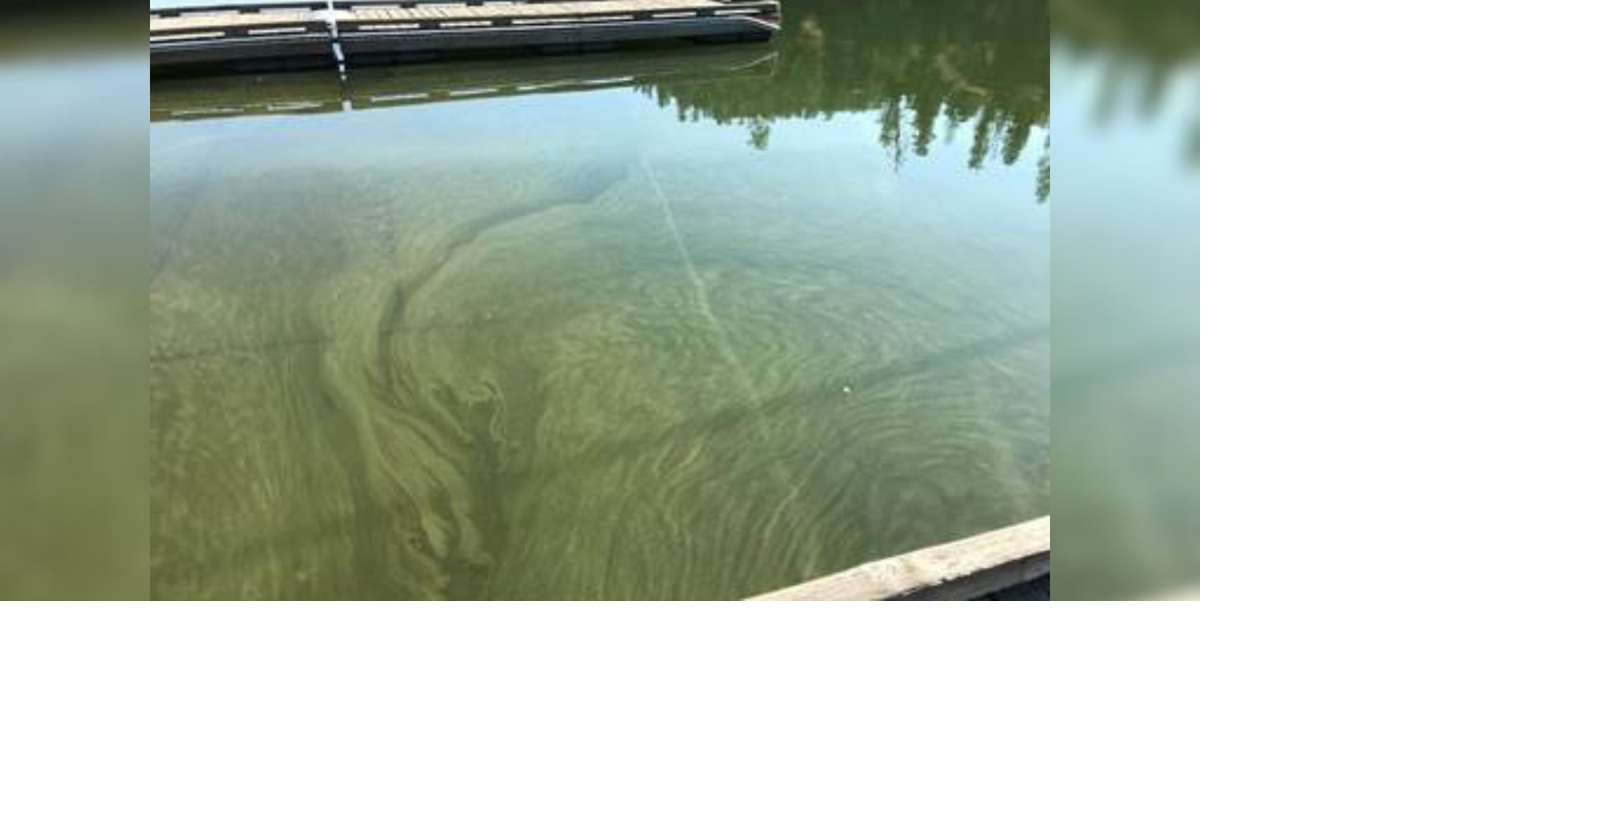 Province says blue-green algae detected in 4 Nova Scotia lakes